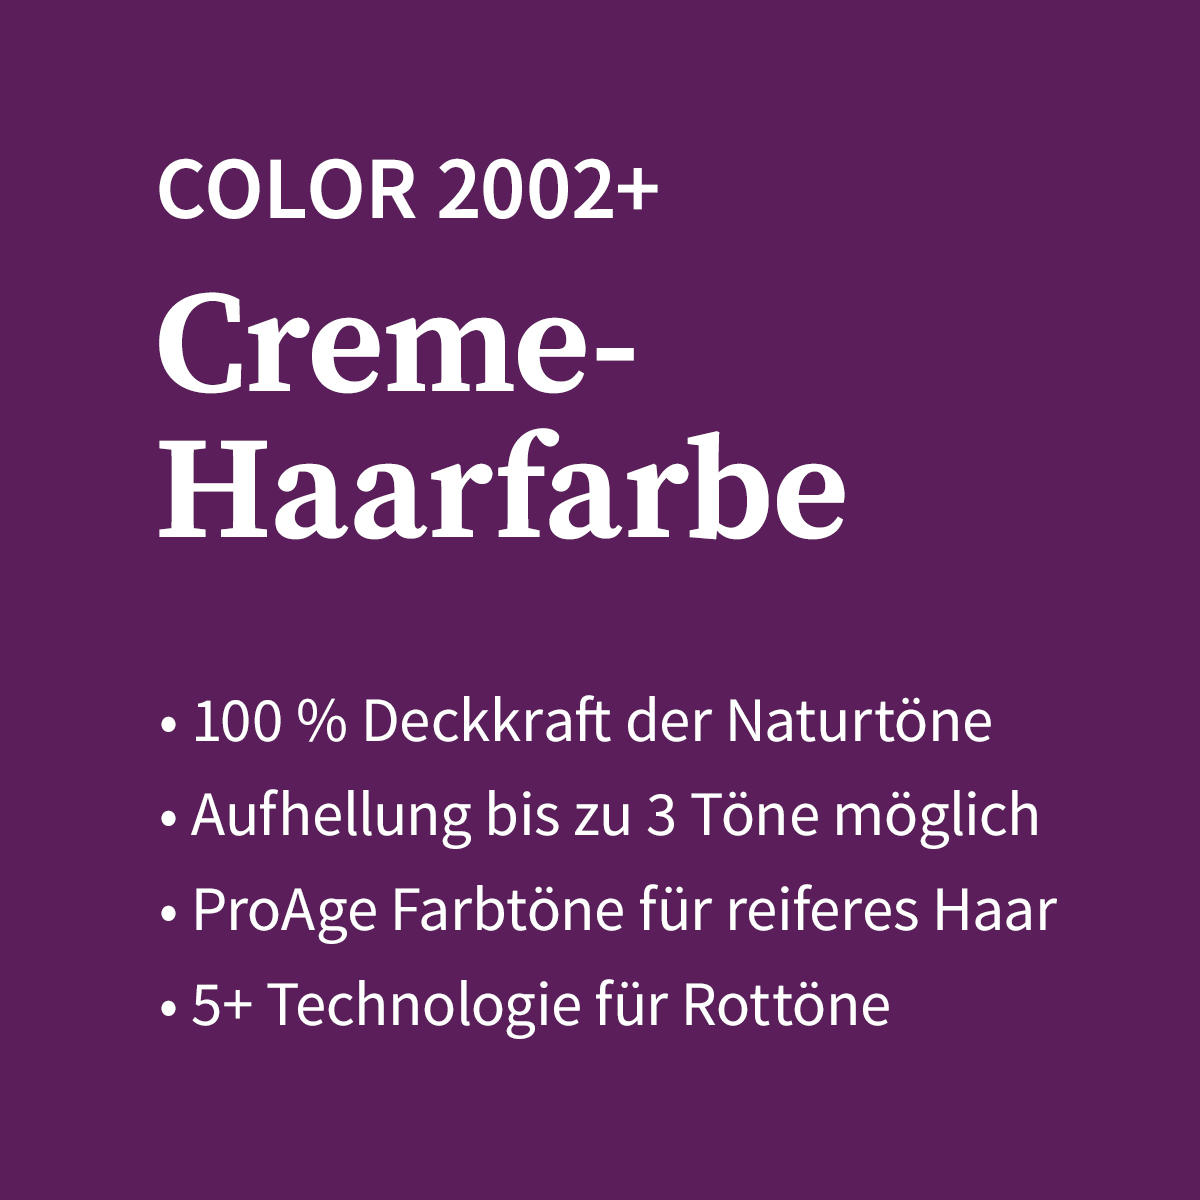 Basler Color 2002+ Cremehaarfarbe 6/4 dunkelblond rot, Tube 60 ml - 4